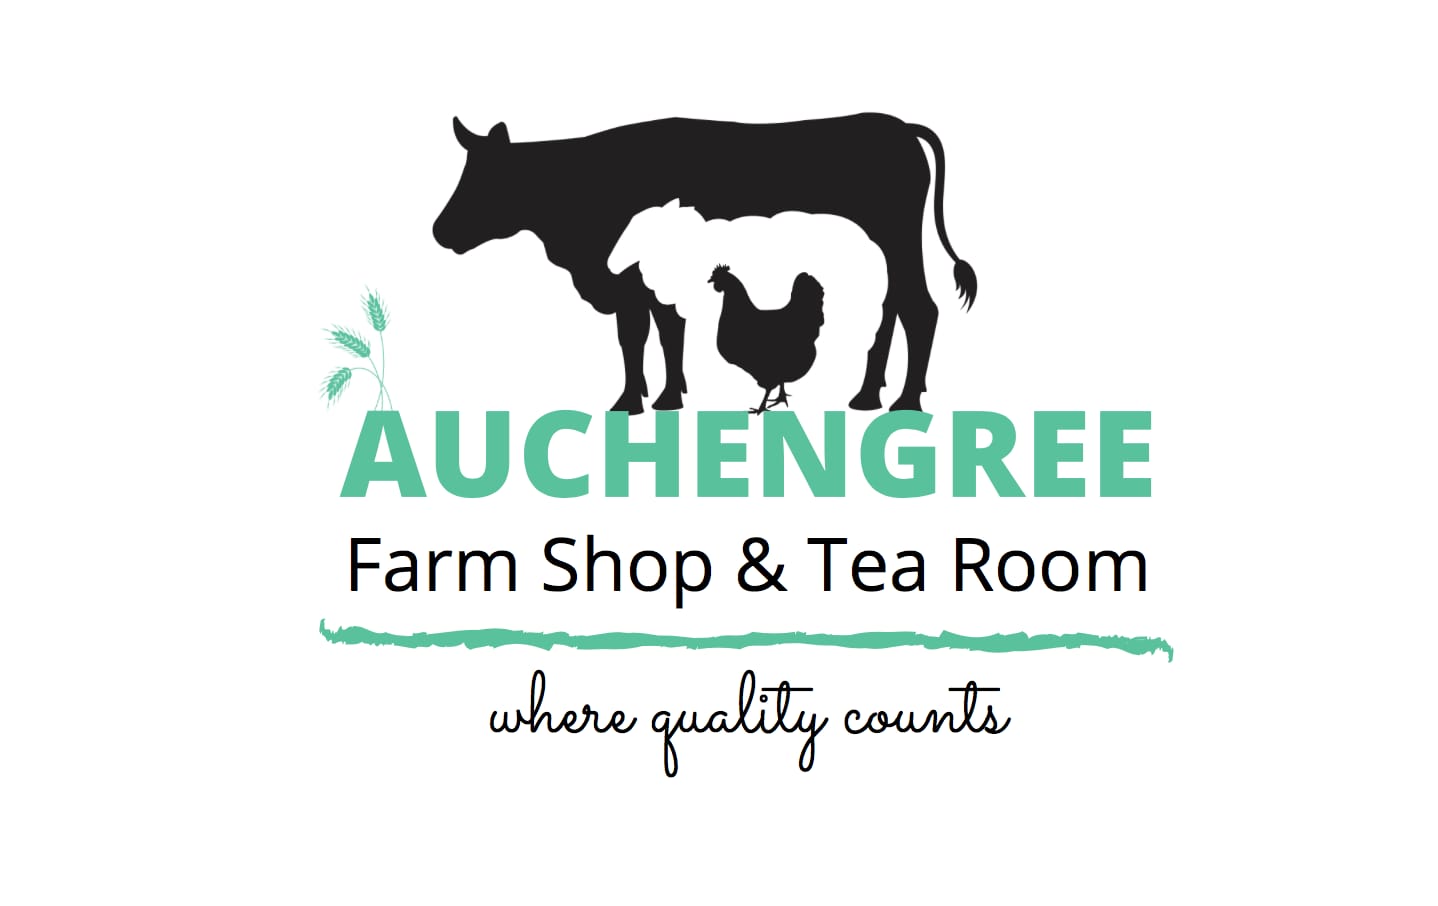 Auchengree Farm Shop